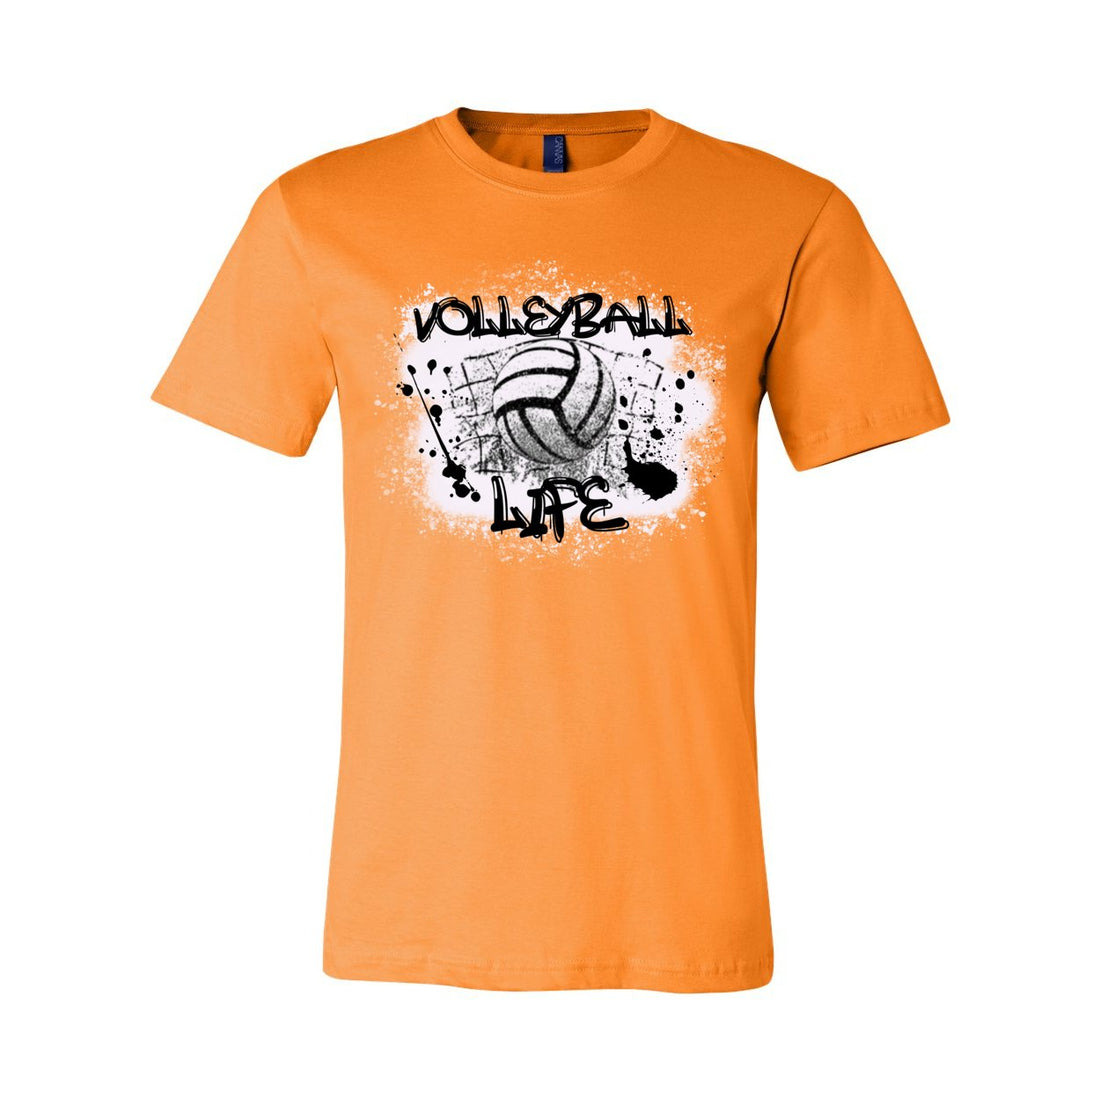 Volleyball Life Short Sleeve Jersey Tee - T-Shirts - Positively Sassy - Volleyball Life Short Sleeve Jersey Tee